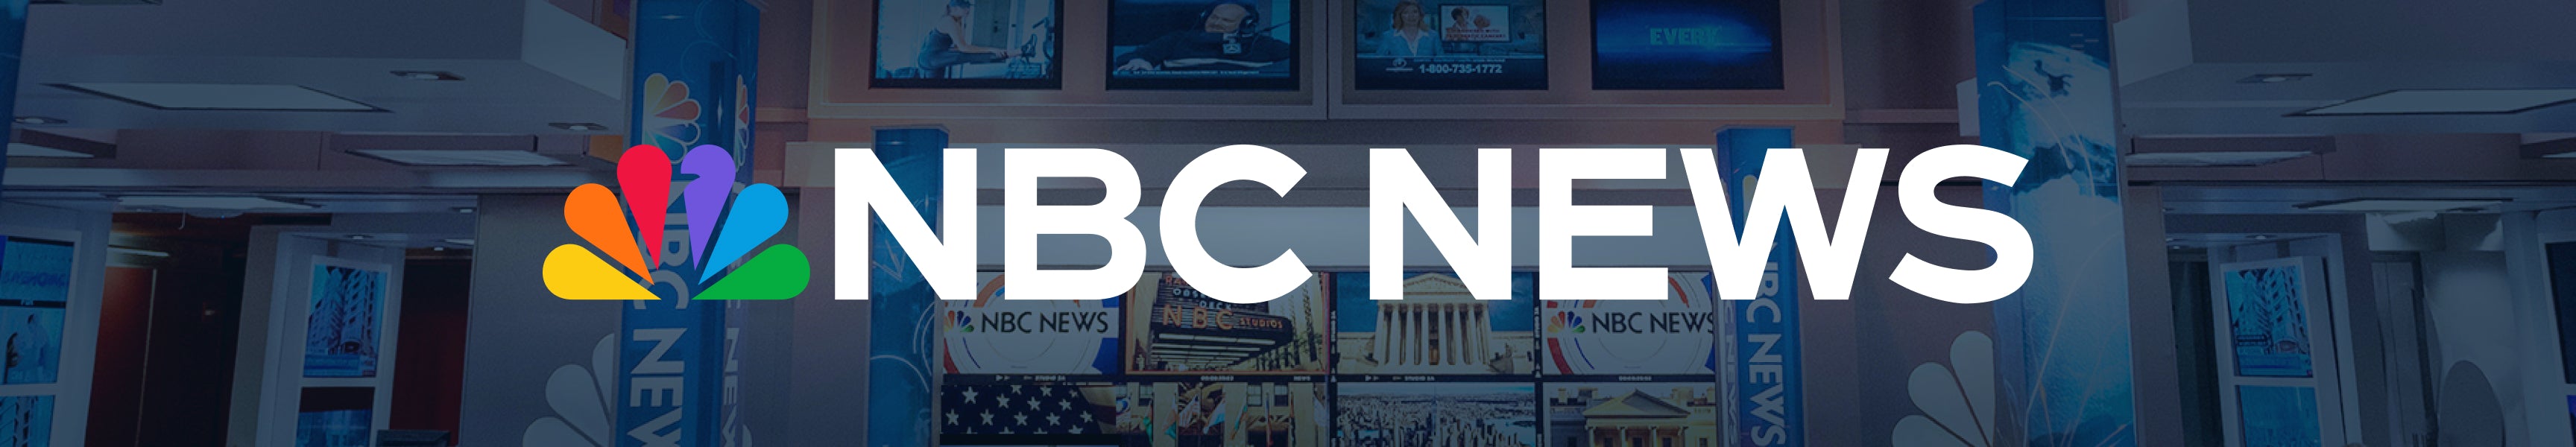 NBC News Gear